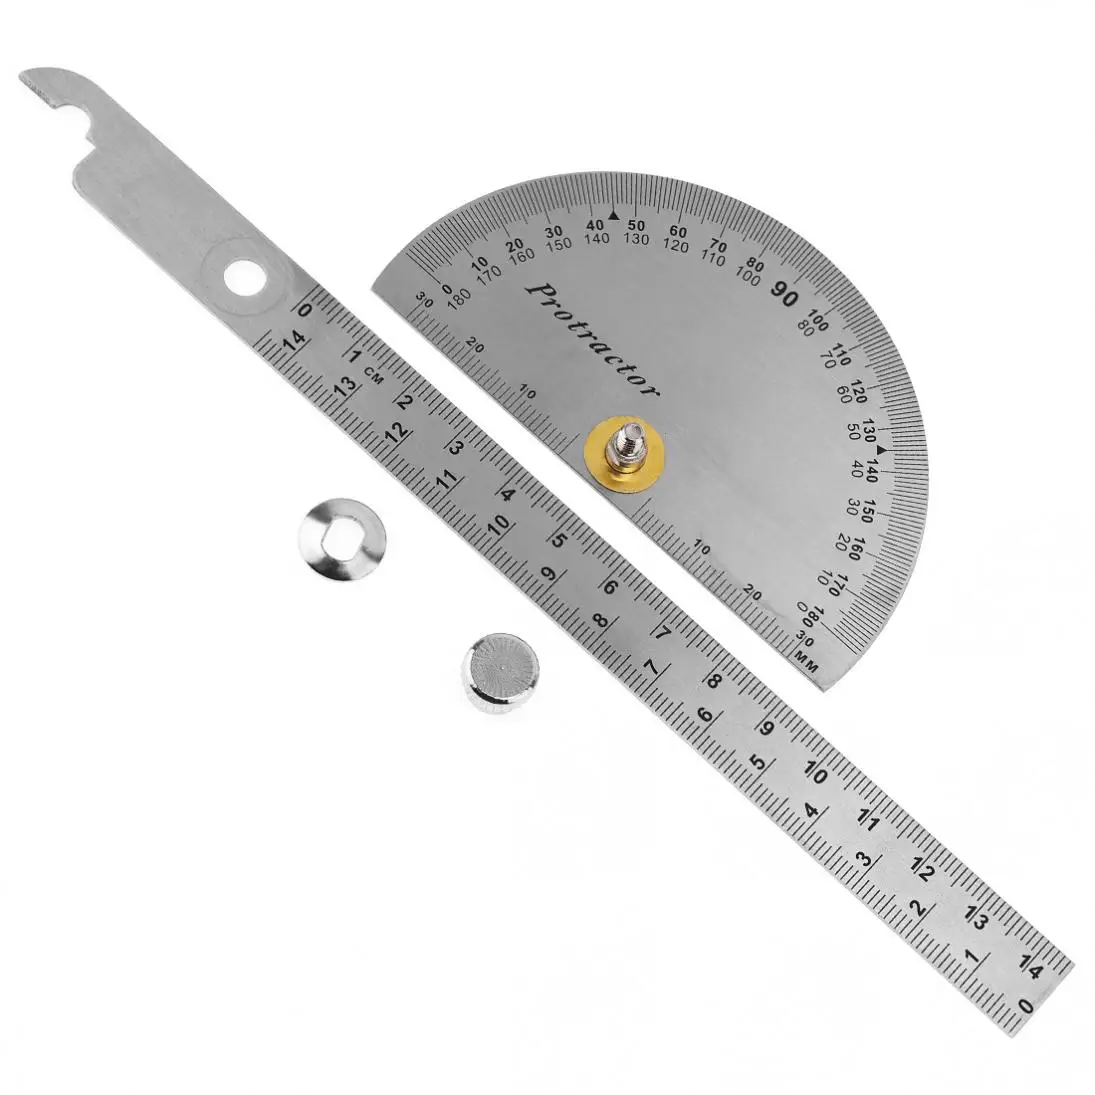 Round Head Rotary Protractor Adjustable Universal Stainless Steel Measuring Tool lehaha 0-180° Angle Ruler 